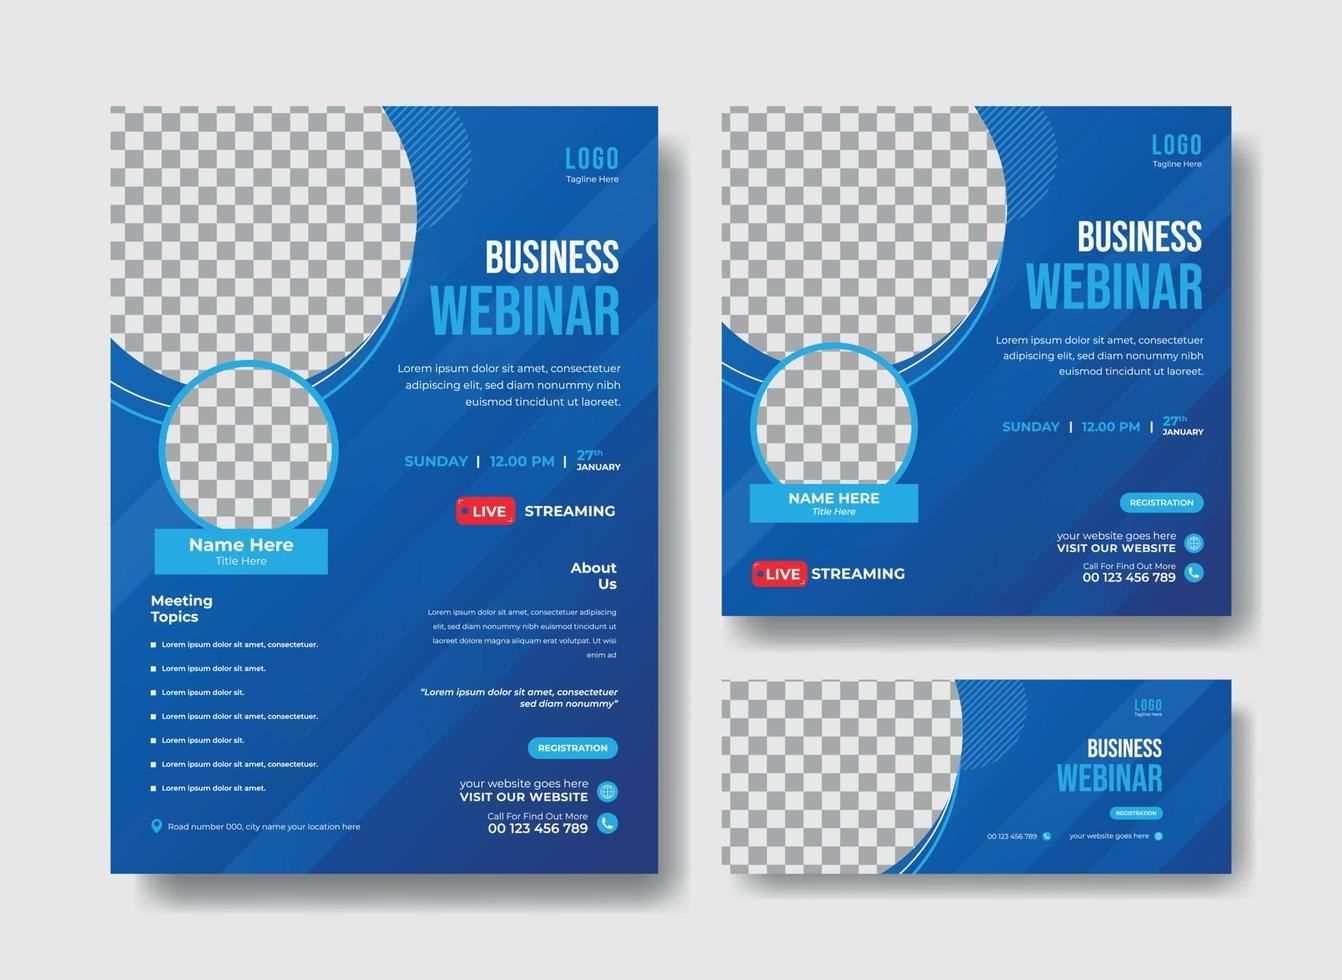 Business webinar flyer template, social media post and facebook cover design vector